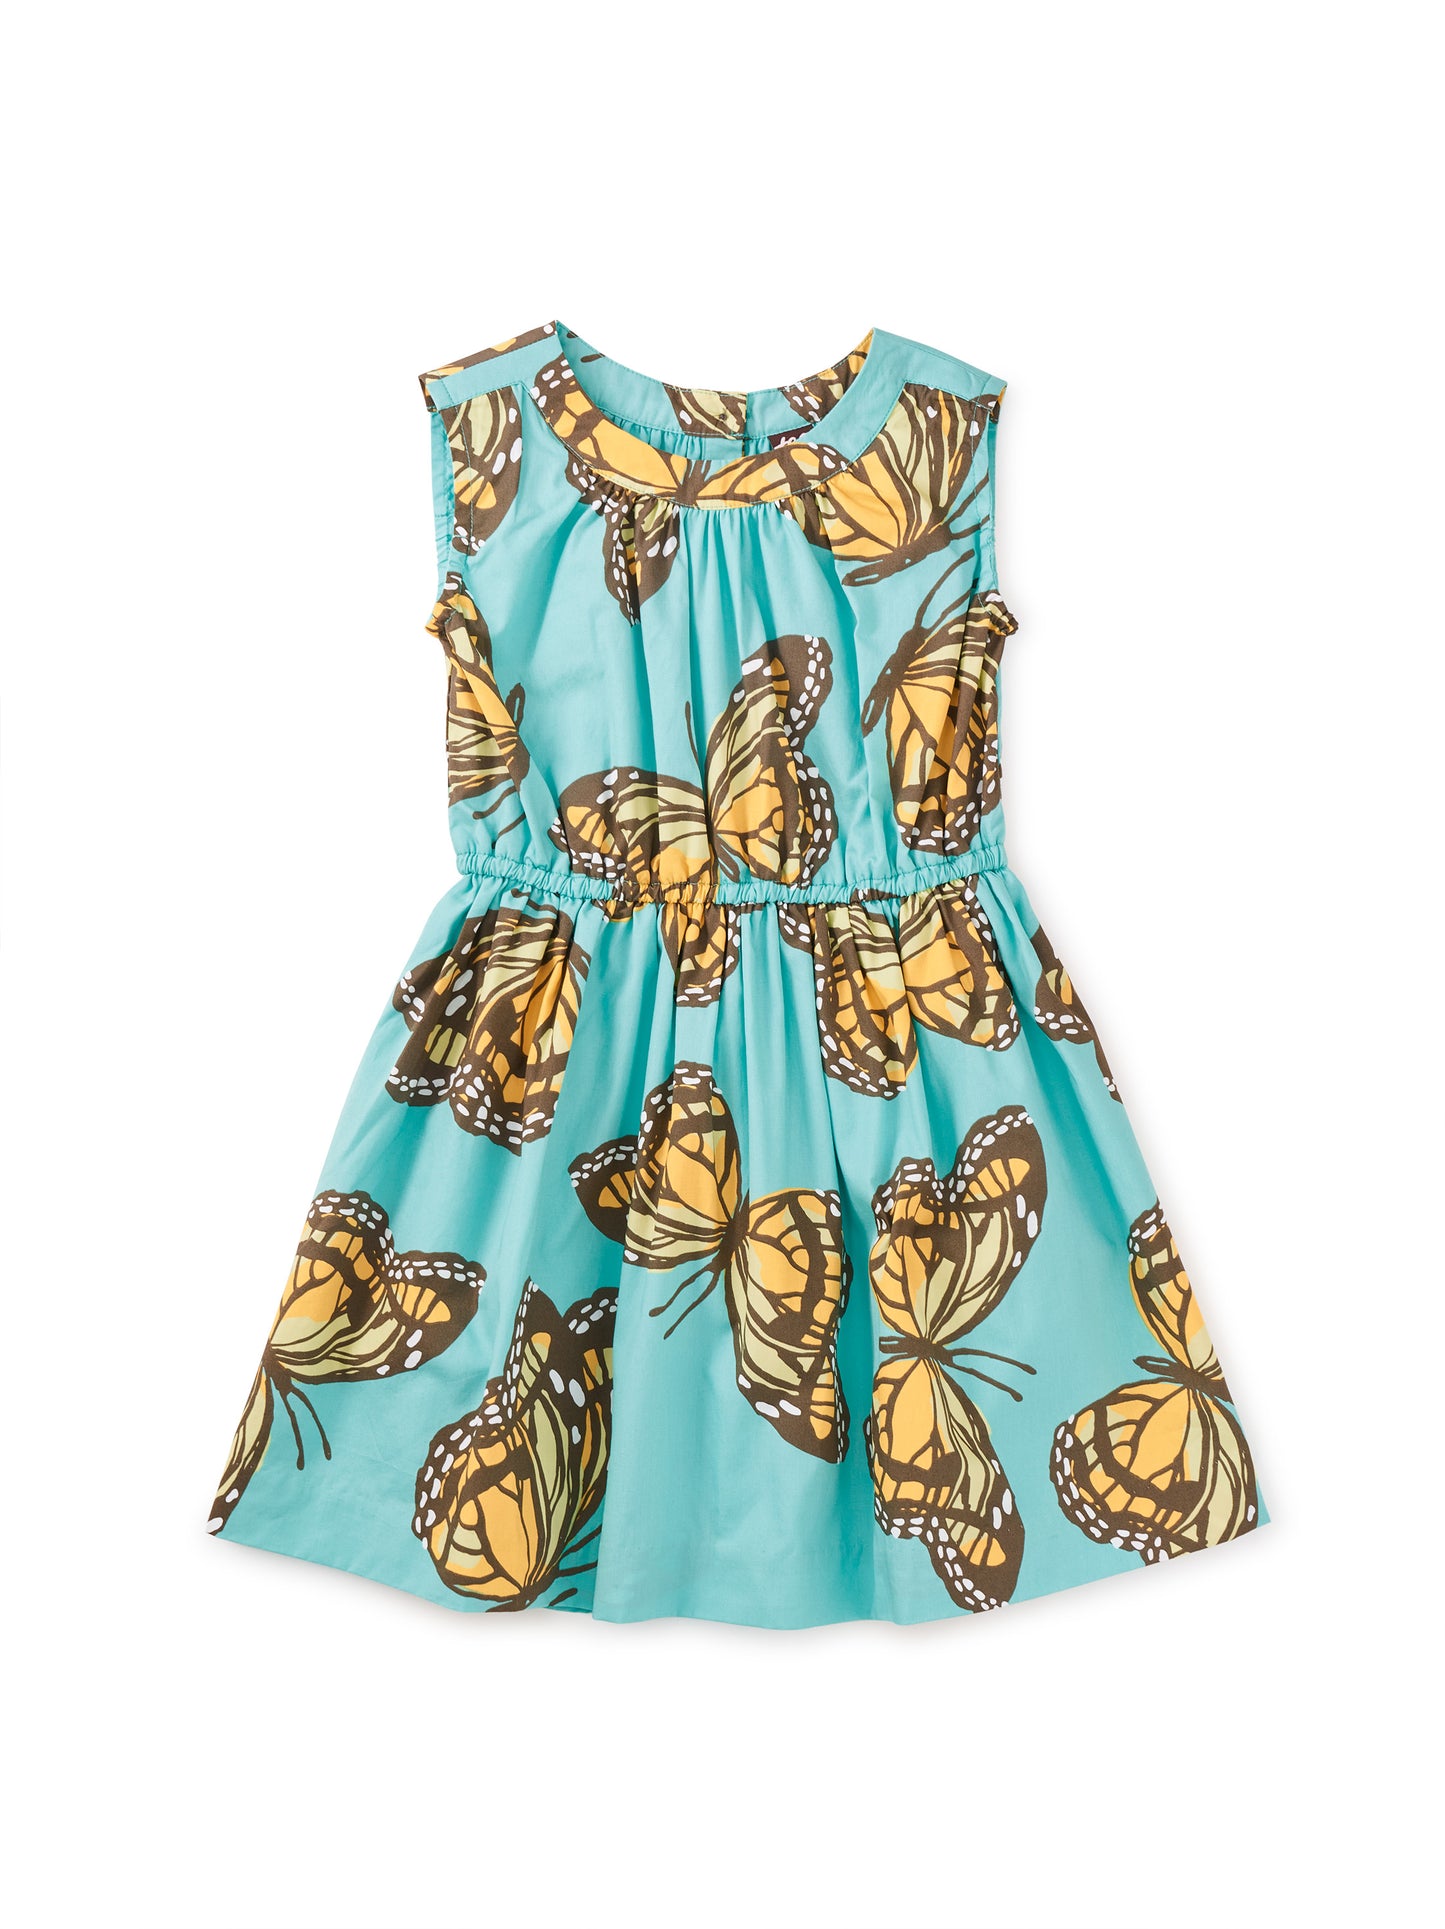 Monarch Sleeveless Dress, 2